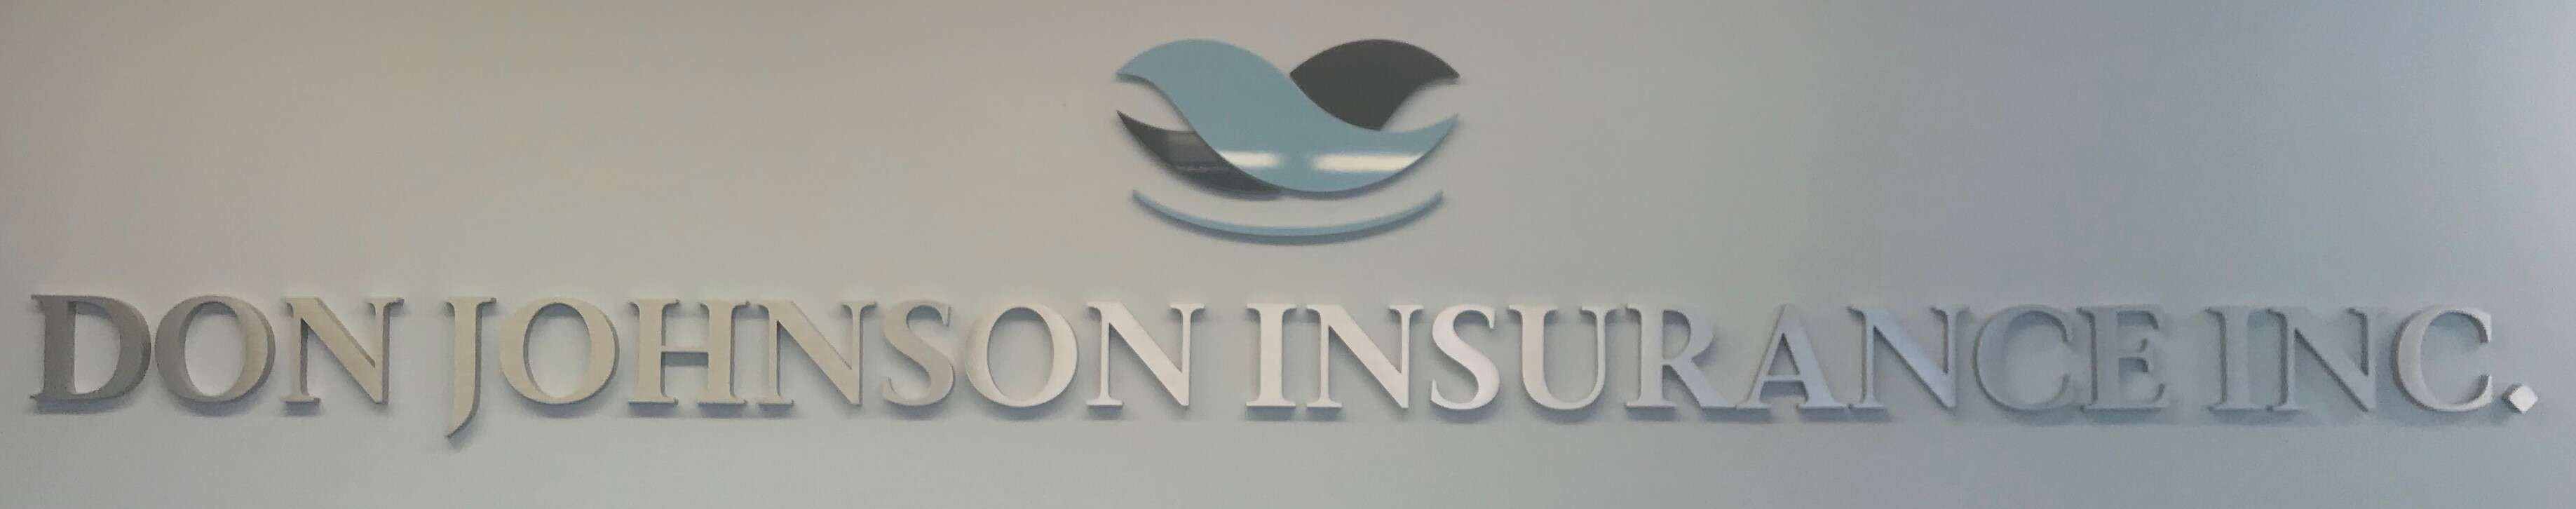 Don Johnson Insurance